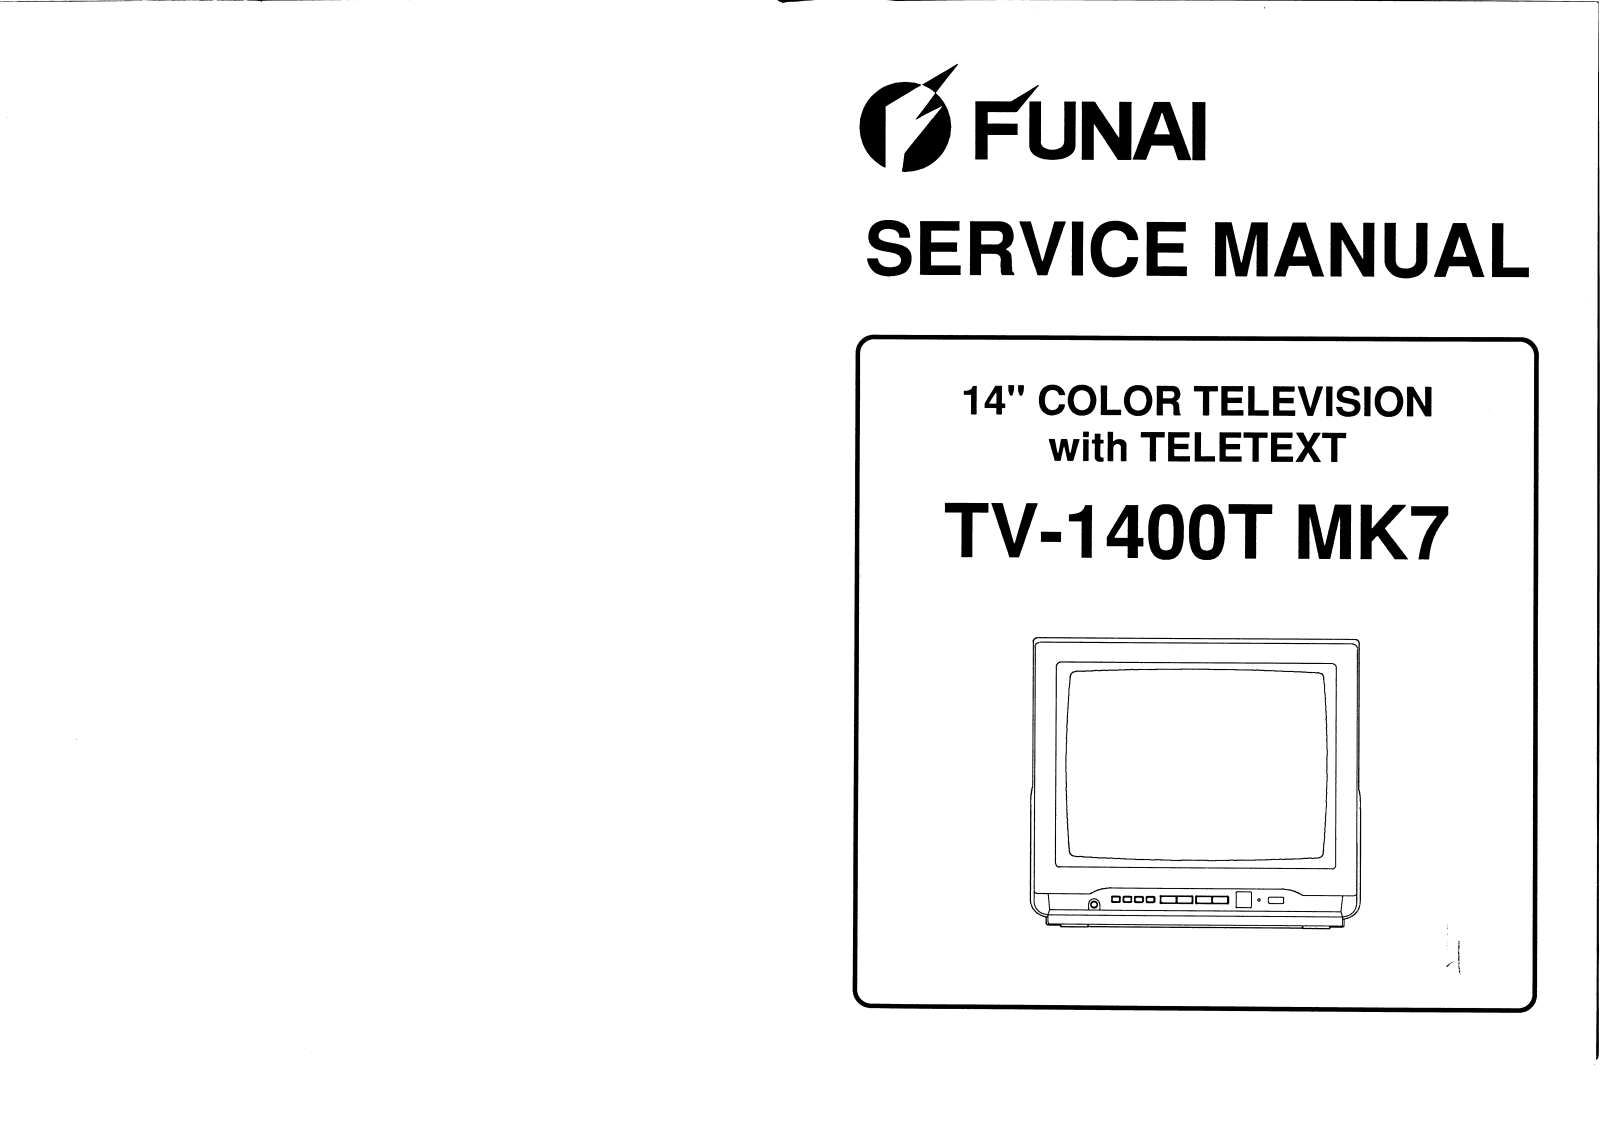 Funai TV-1400T MK7 Service manual